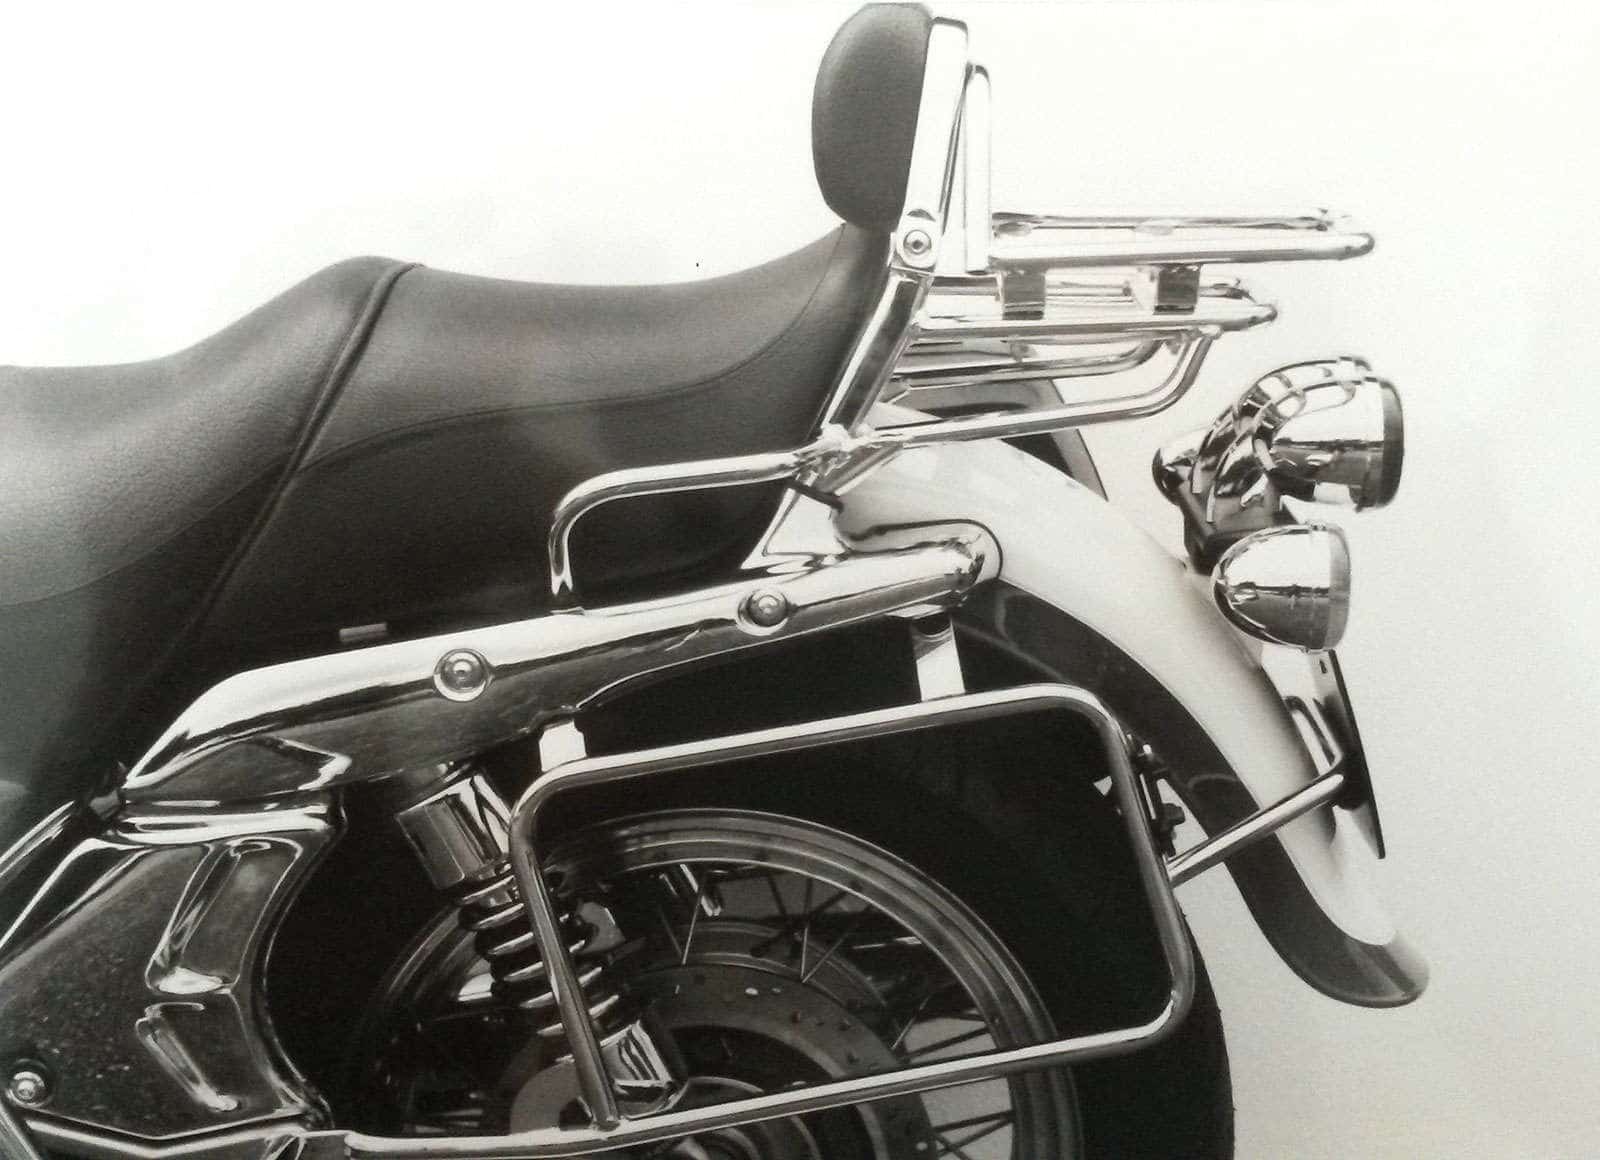 Sidecarrier permanent mounted chrome for Moto Guzzi California 1100/Evolution